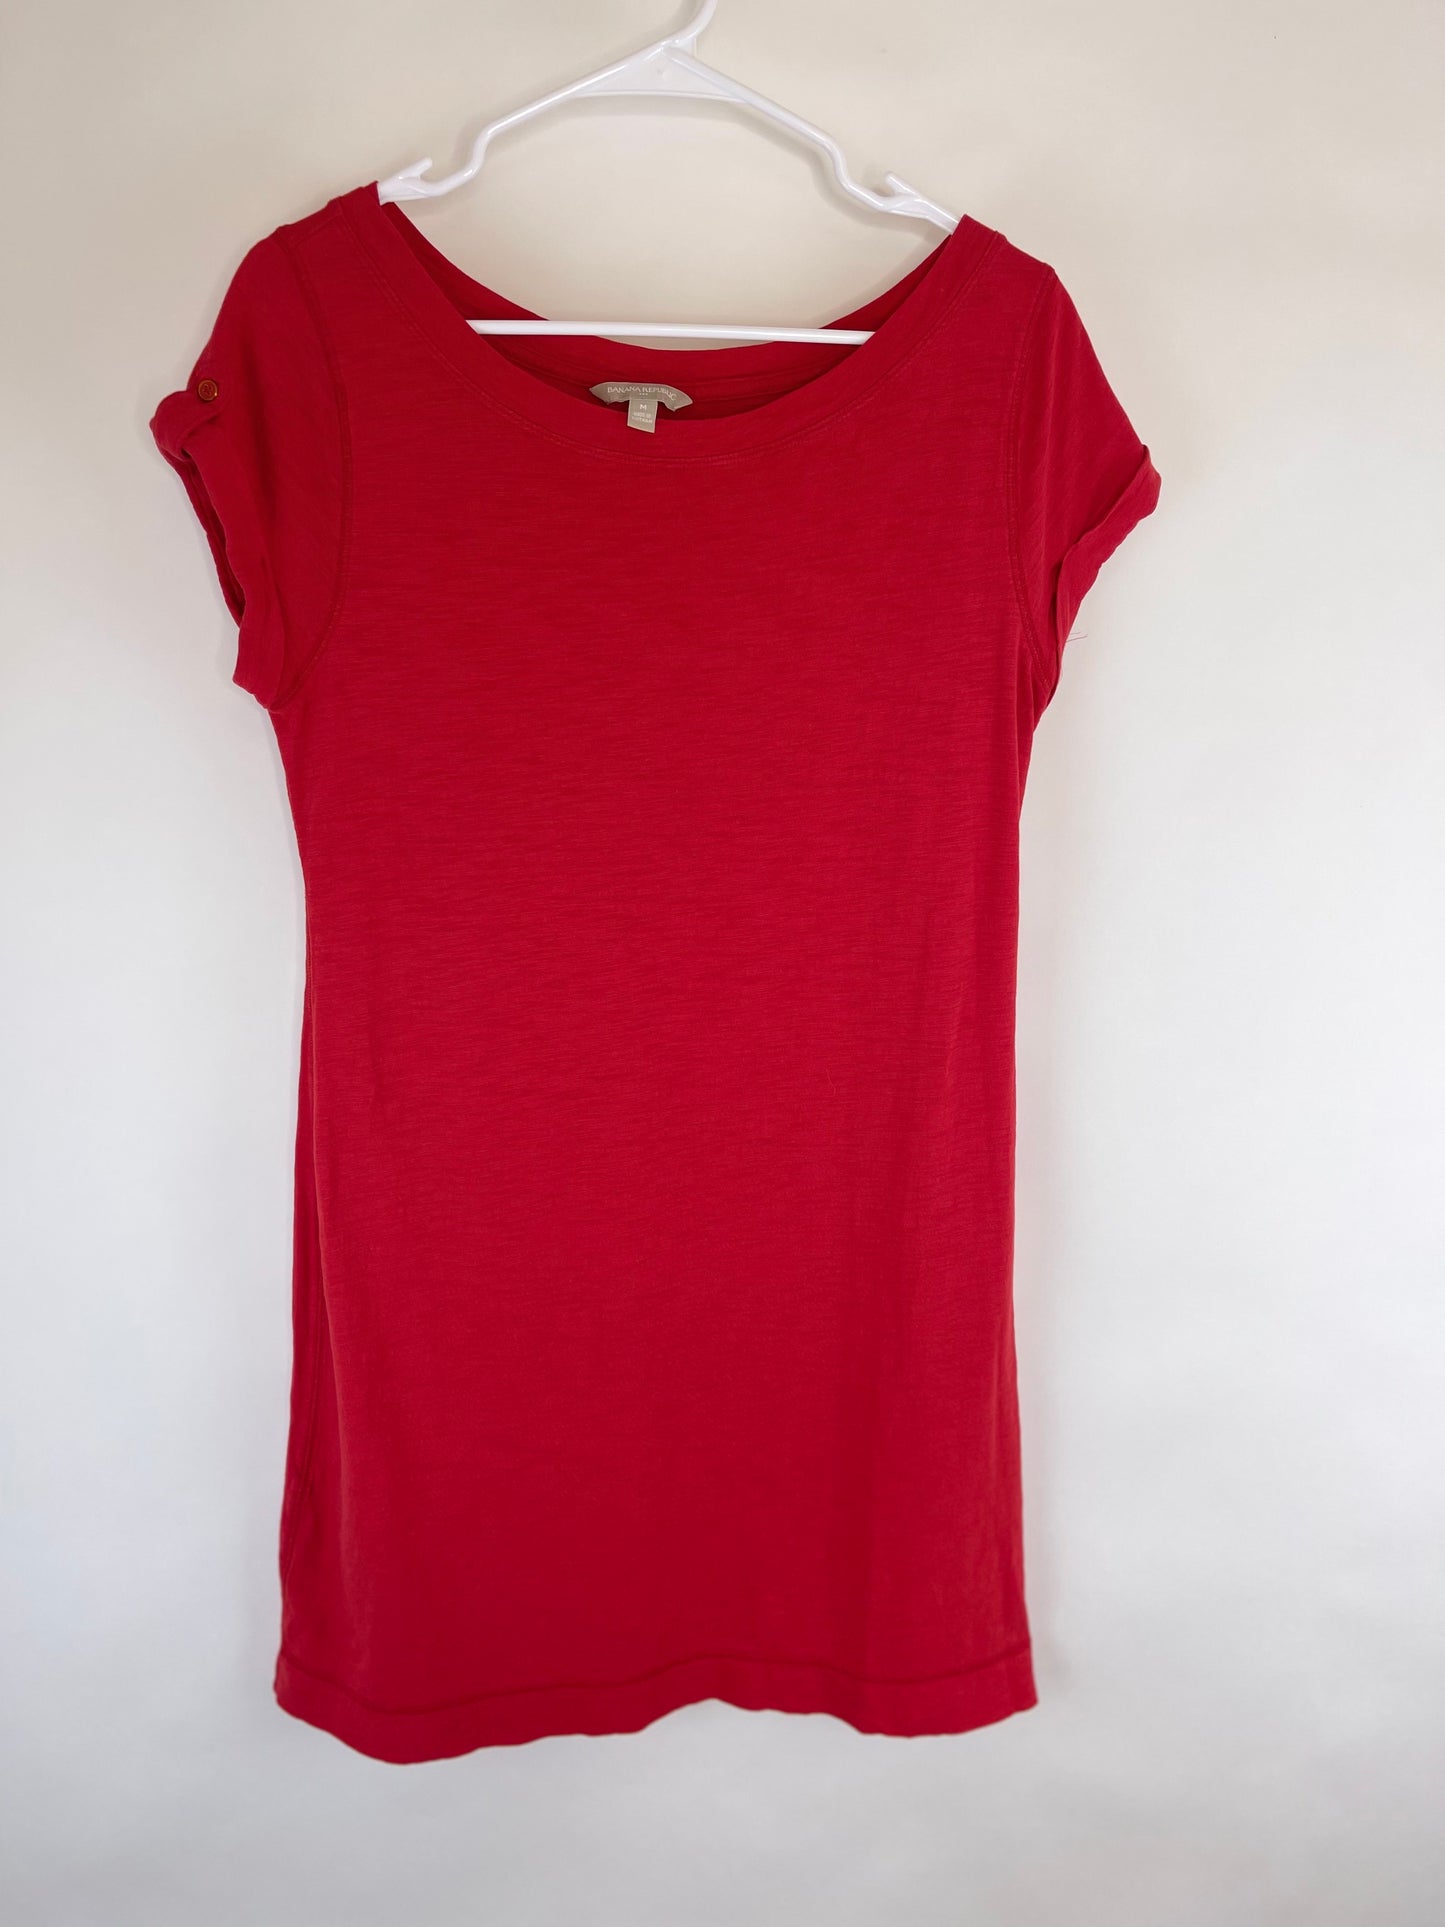 Banana Republic Red T Shirt Dress - M